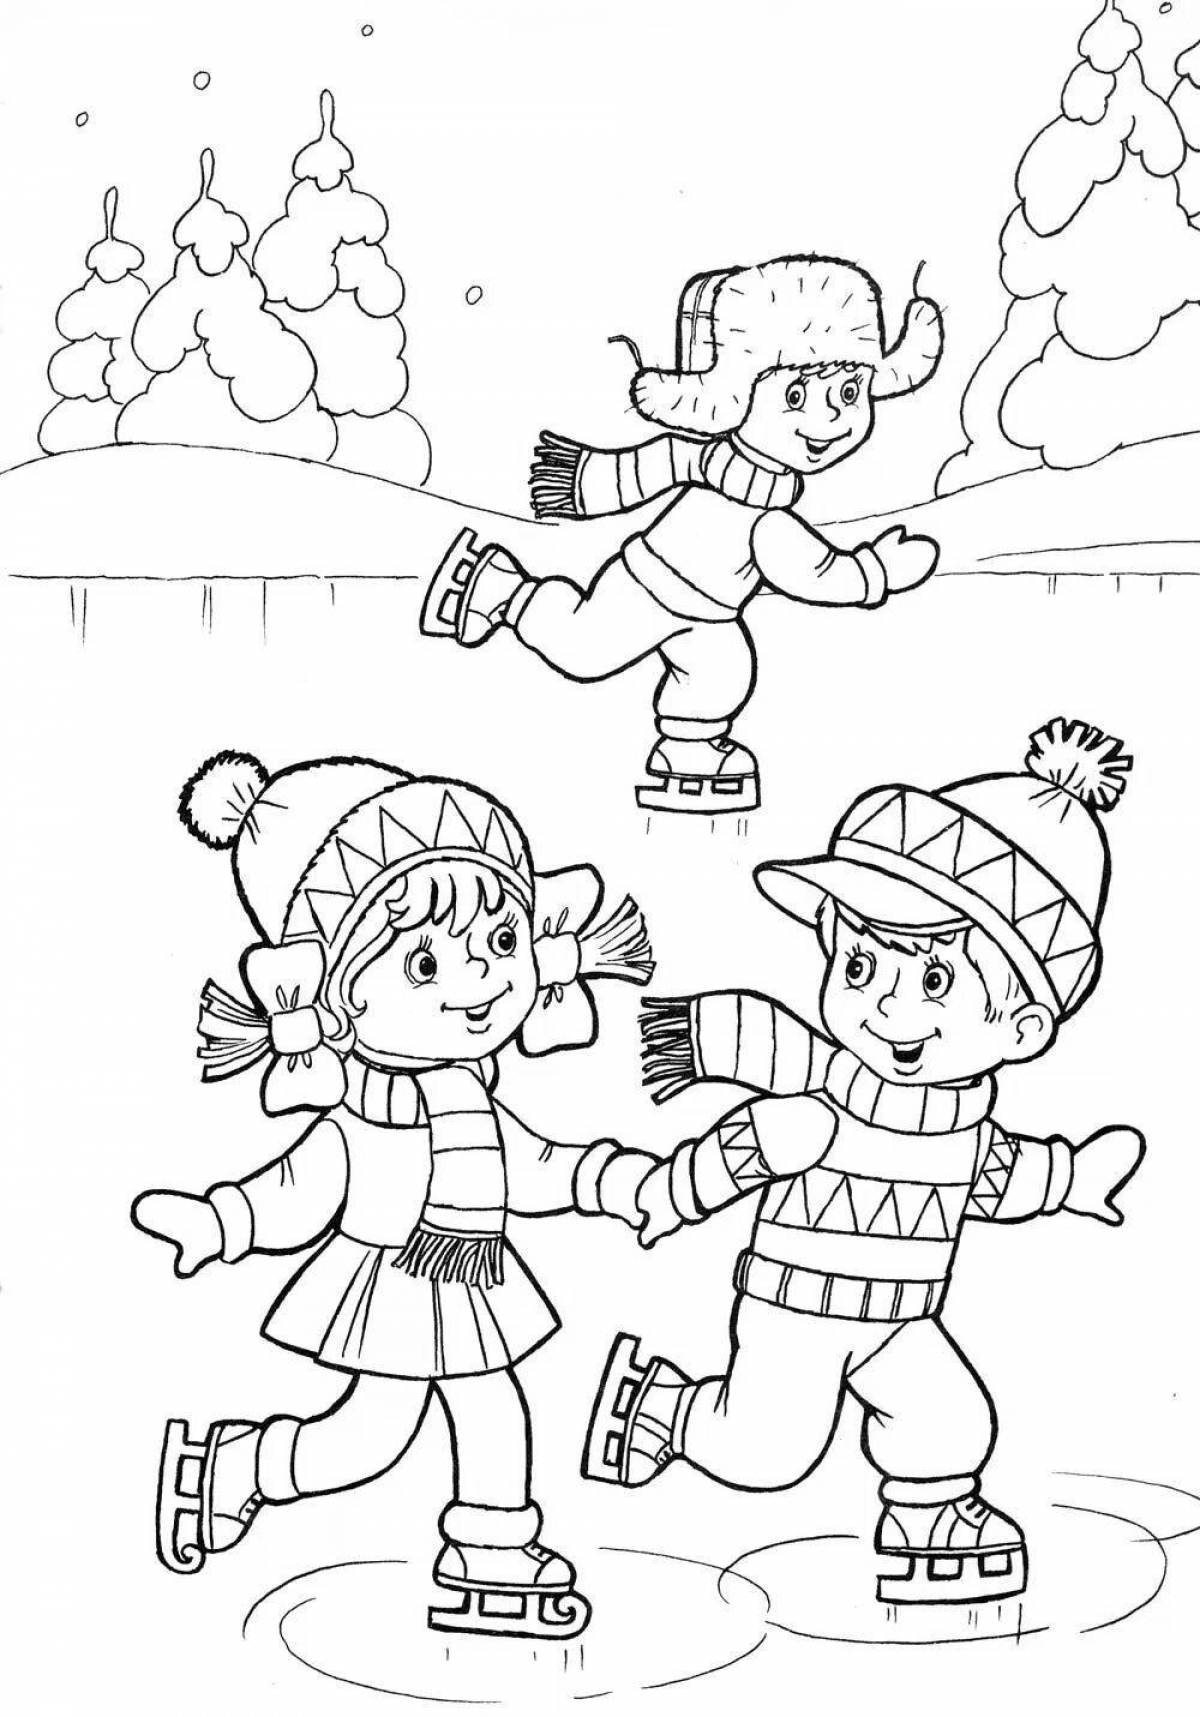 Winter wonderland coloring for schoolchildren